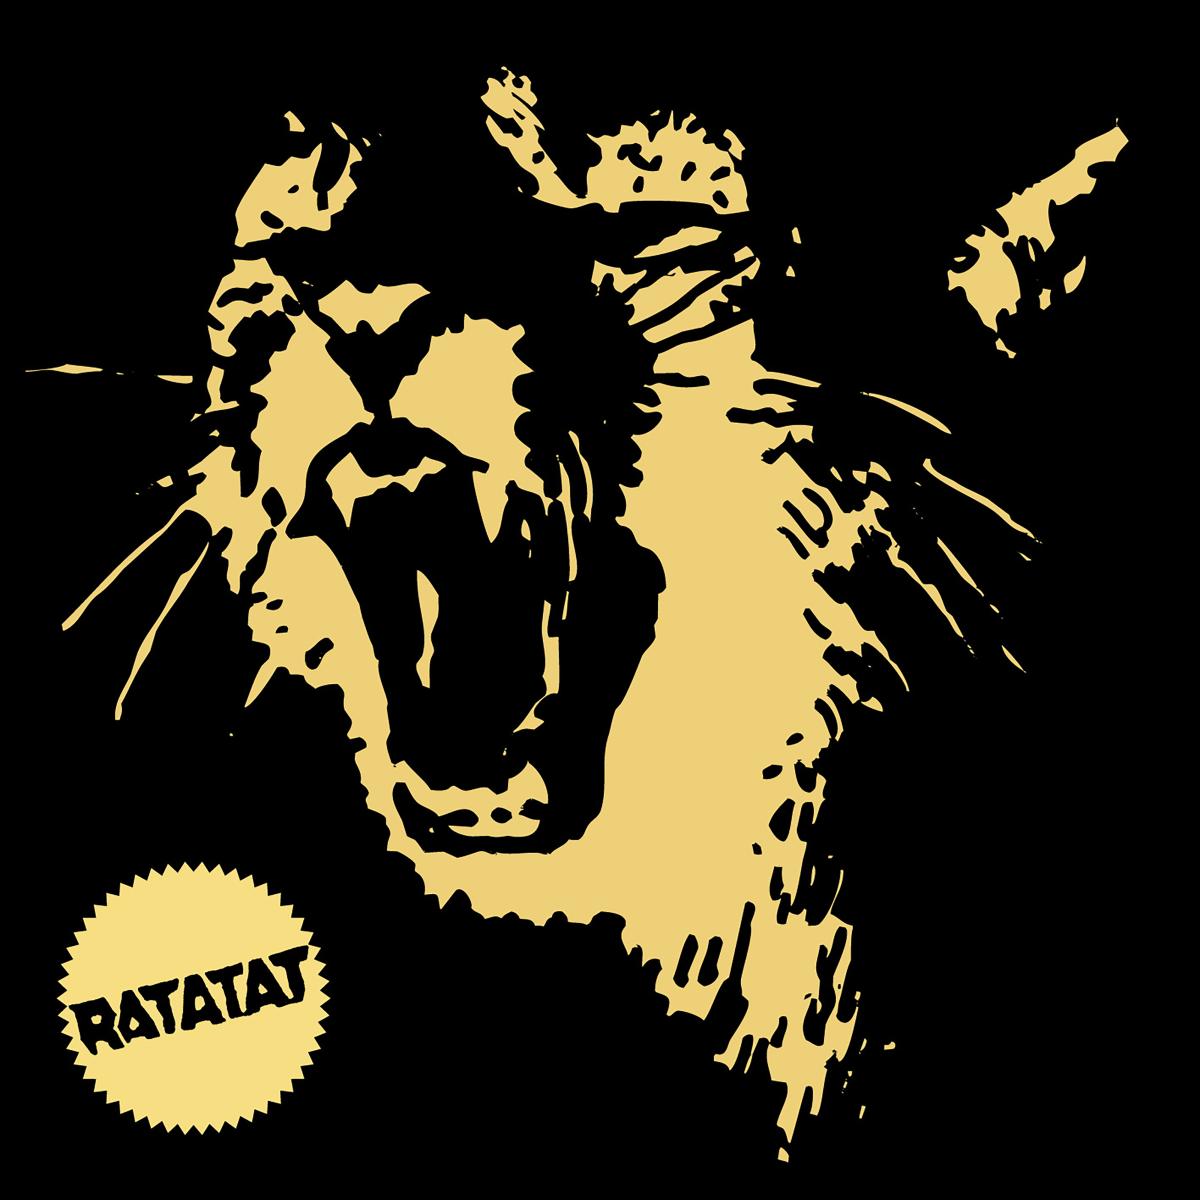 Ratatat - Clásicos - LP